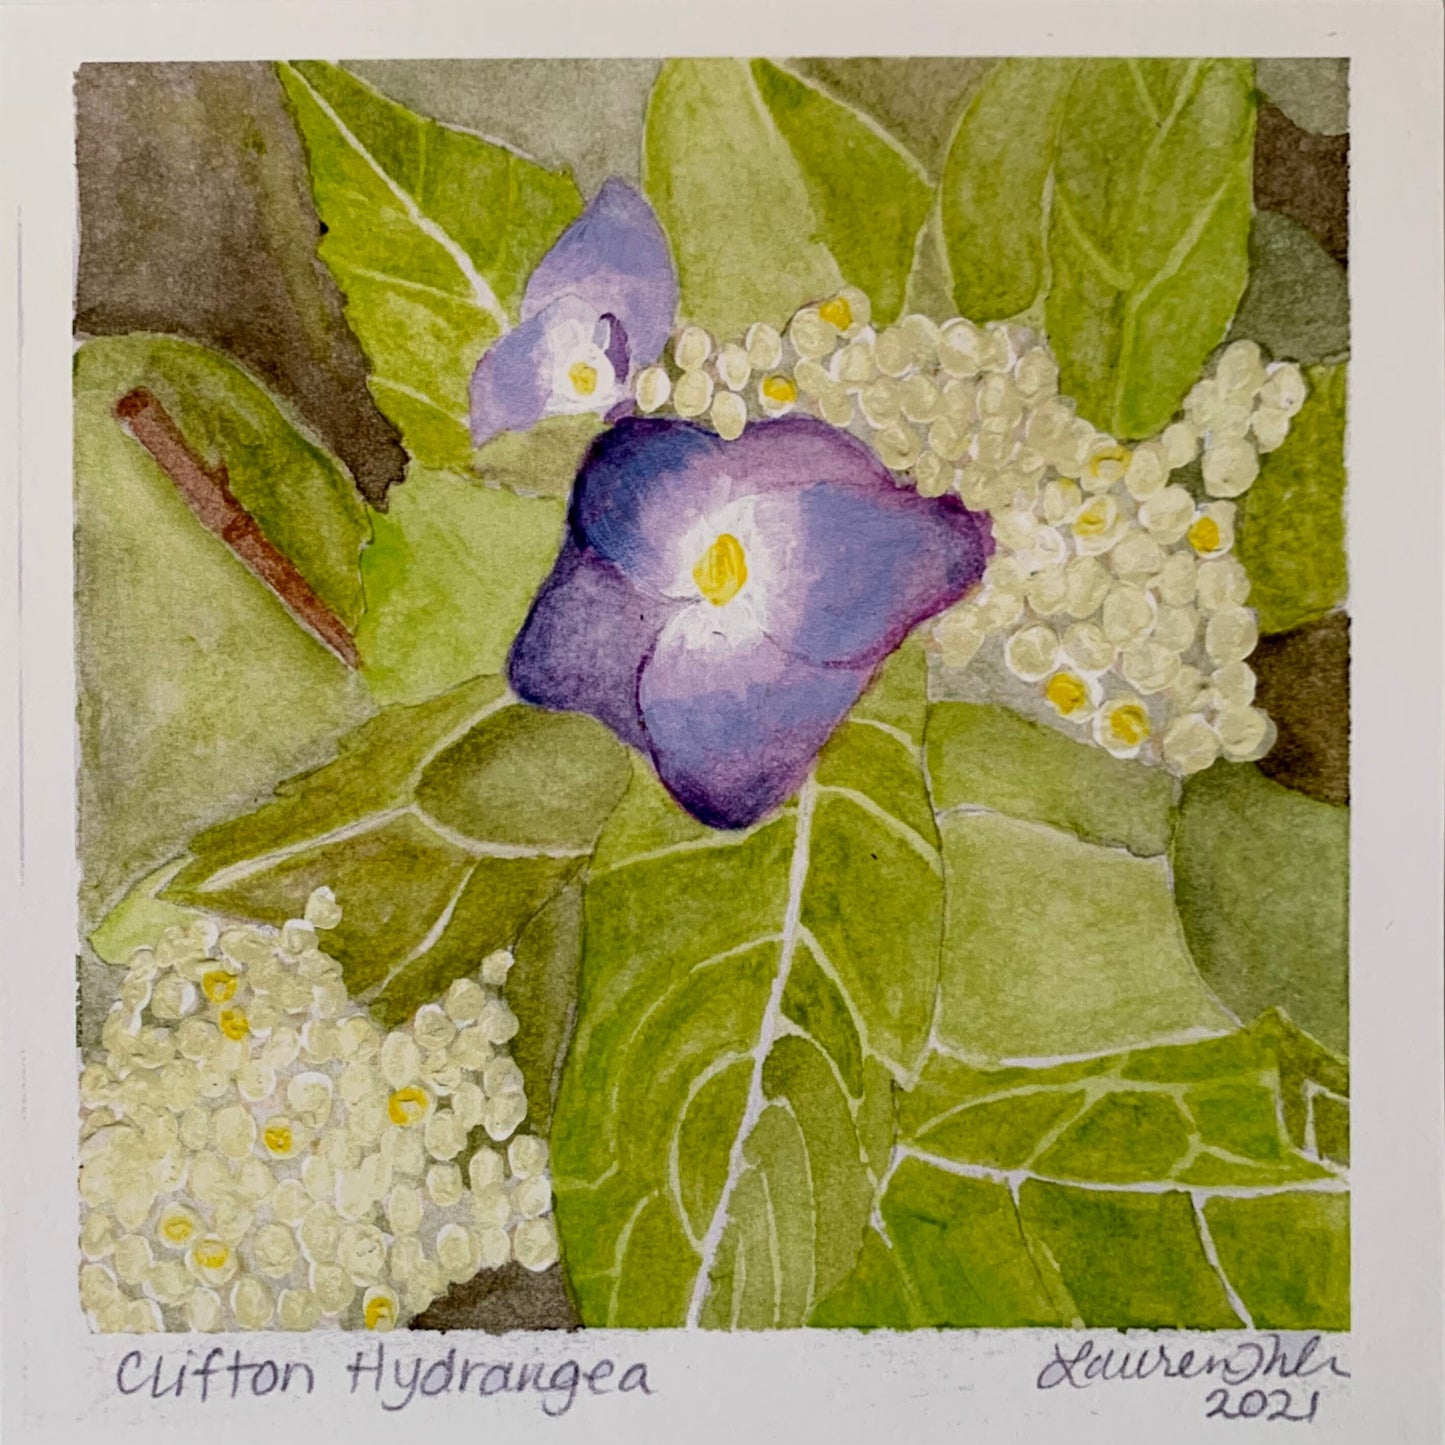 Clifton Hydrangea 8x8 giclée print on fine art paper